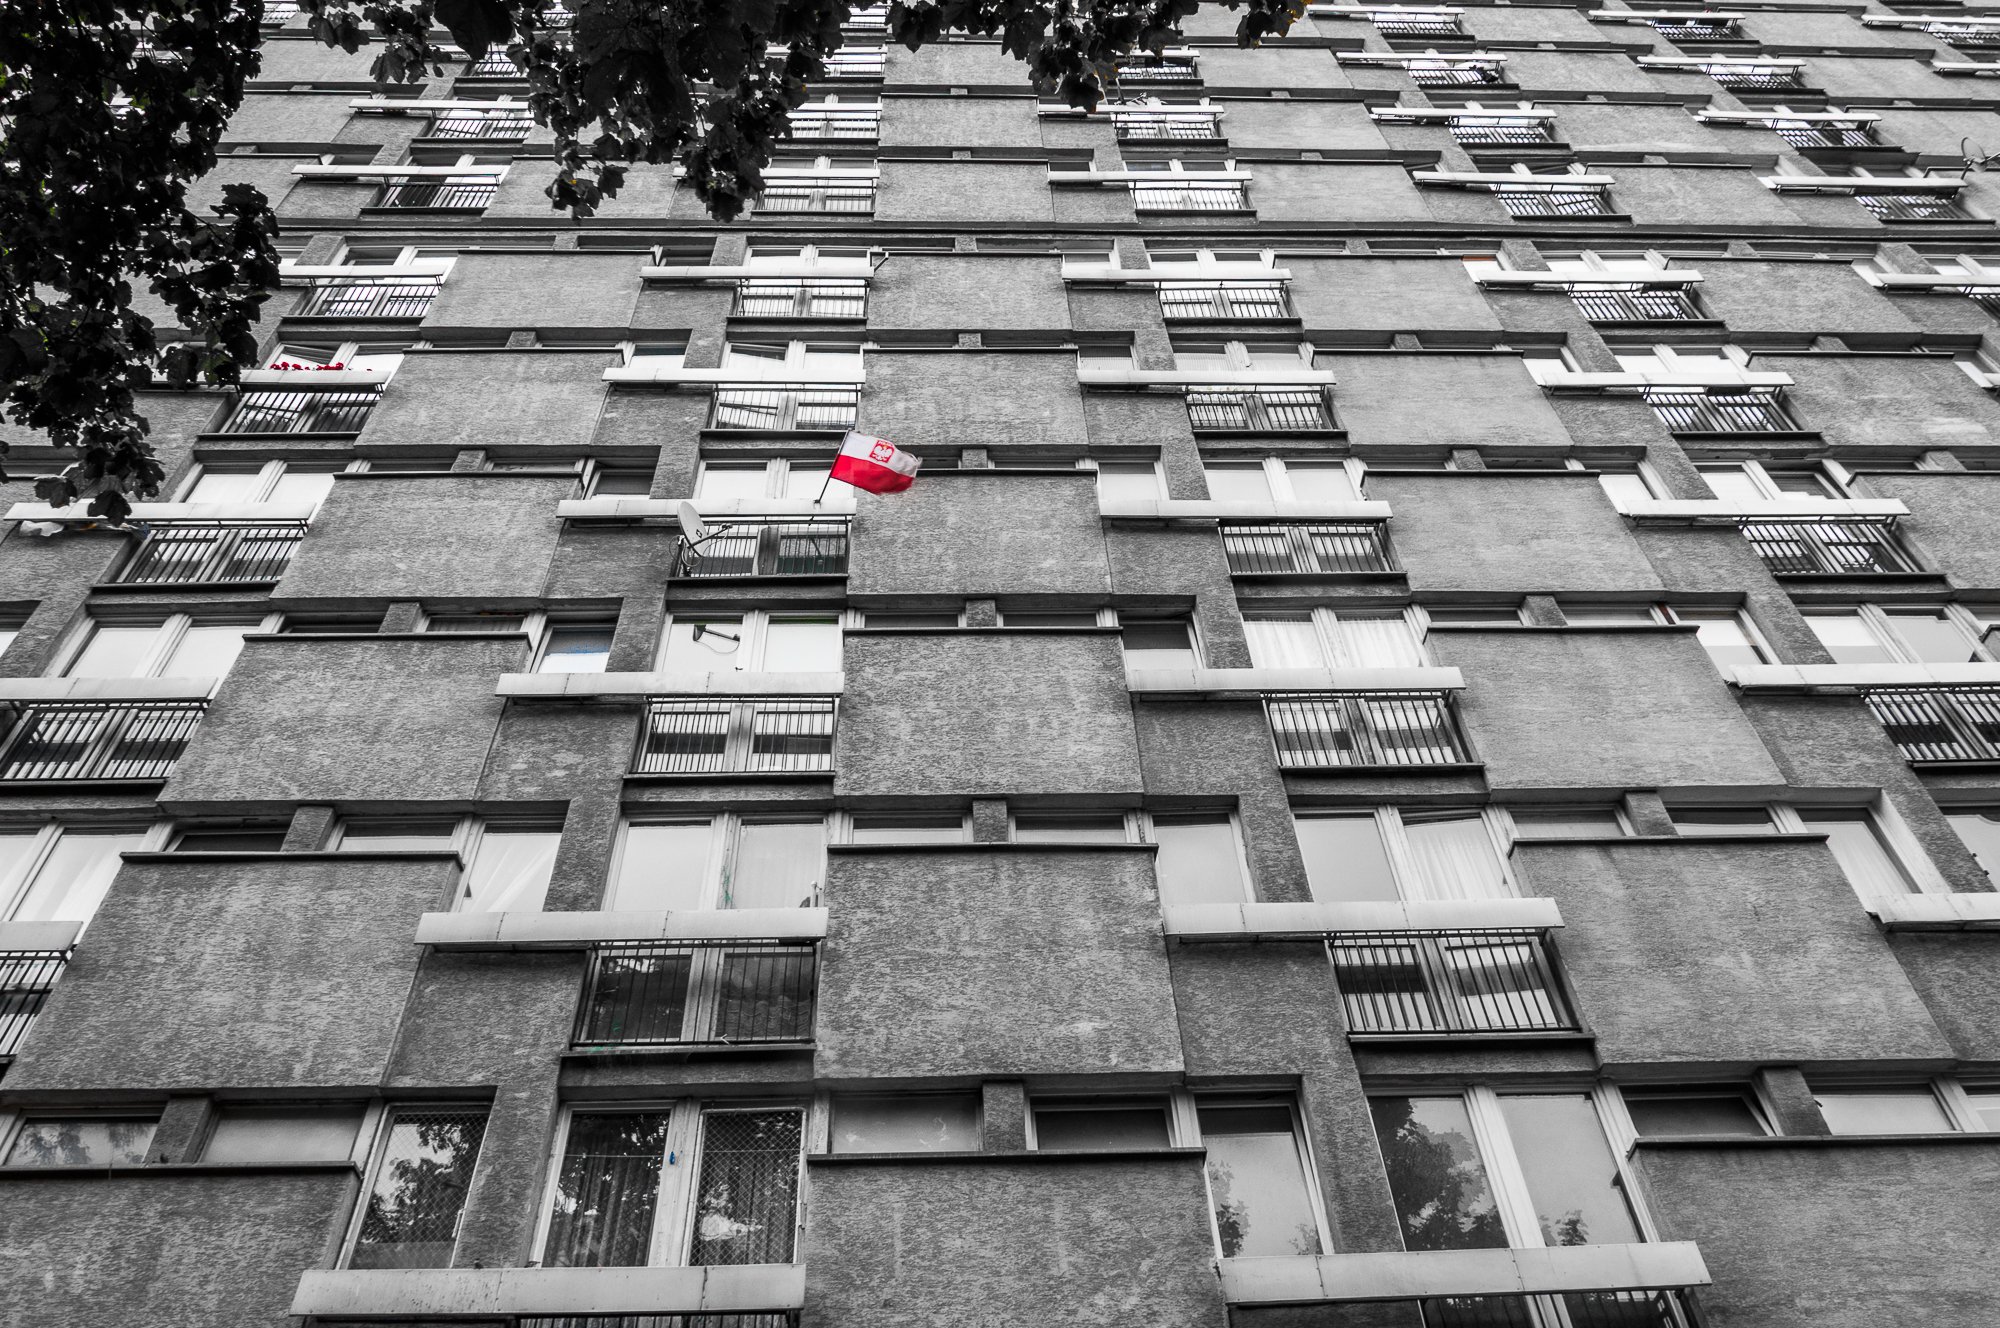 Adam Mazek Photography Warsaw 2017. Minimalism. Inspired by Poland. Flag of Poland in the window.